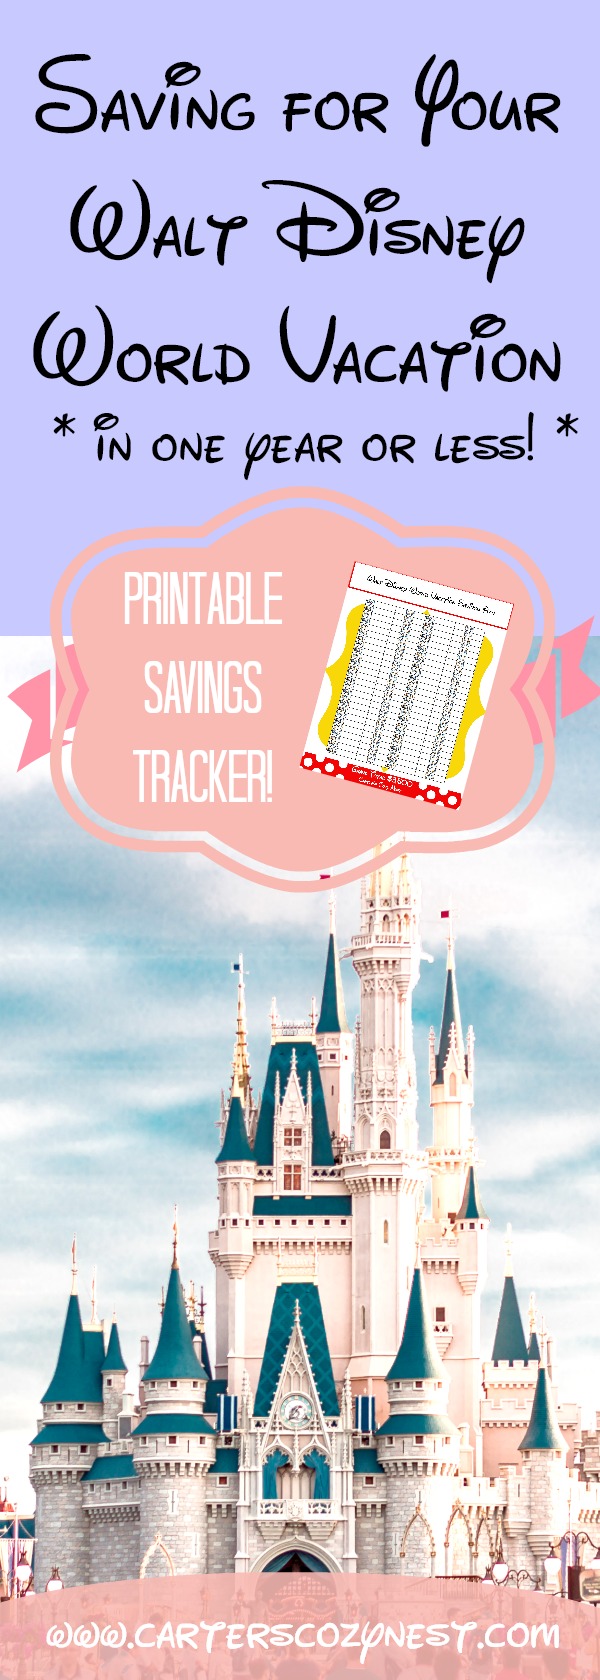 Saving for Your Walt Disney World Vacation Pinterest Graphic